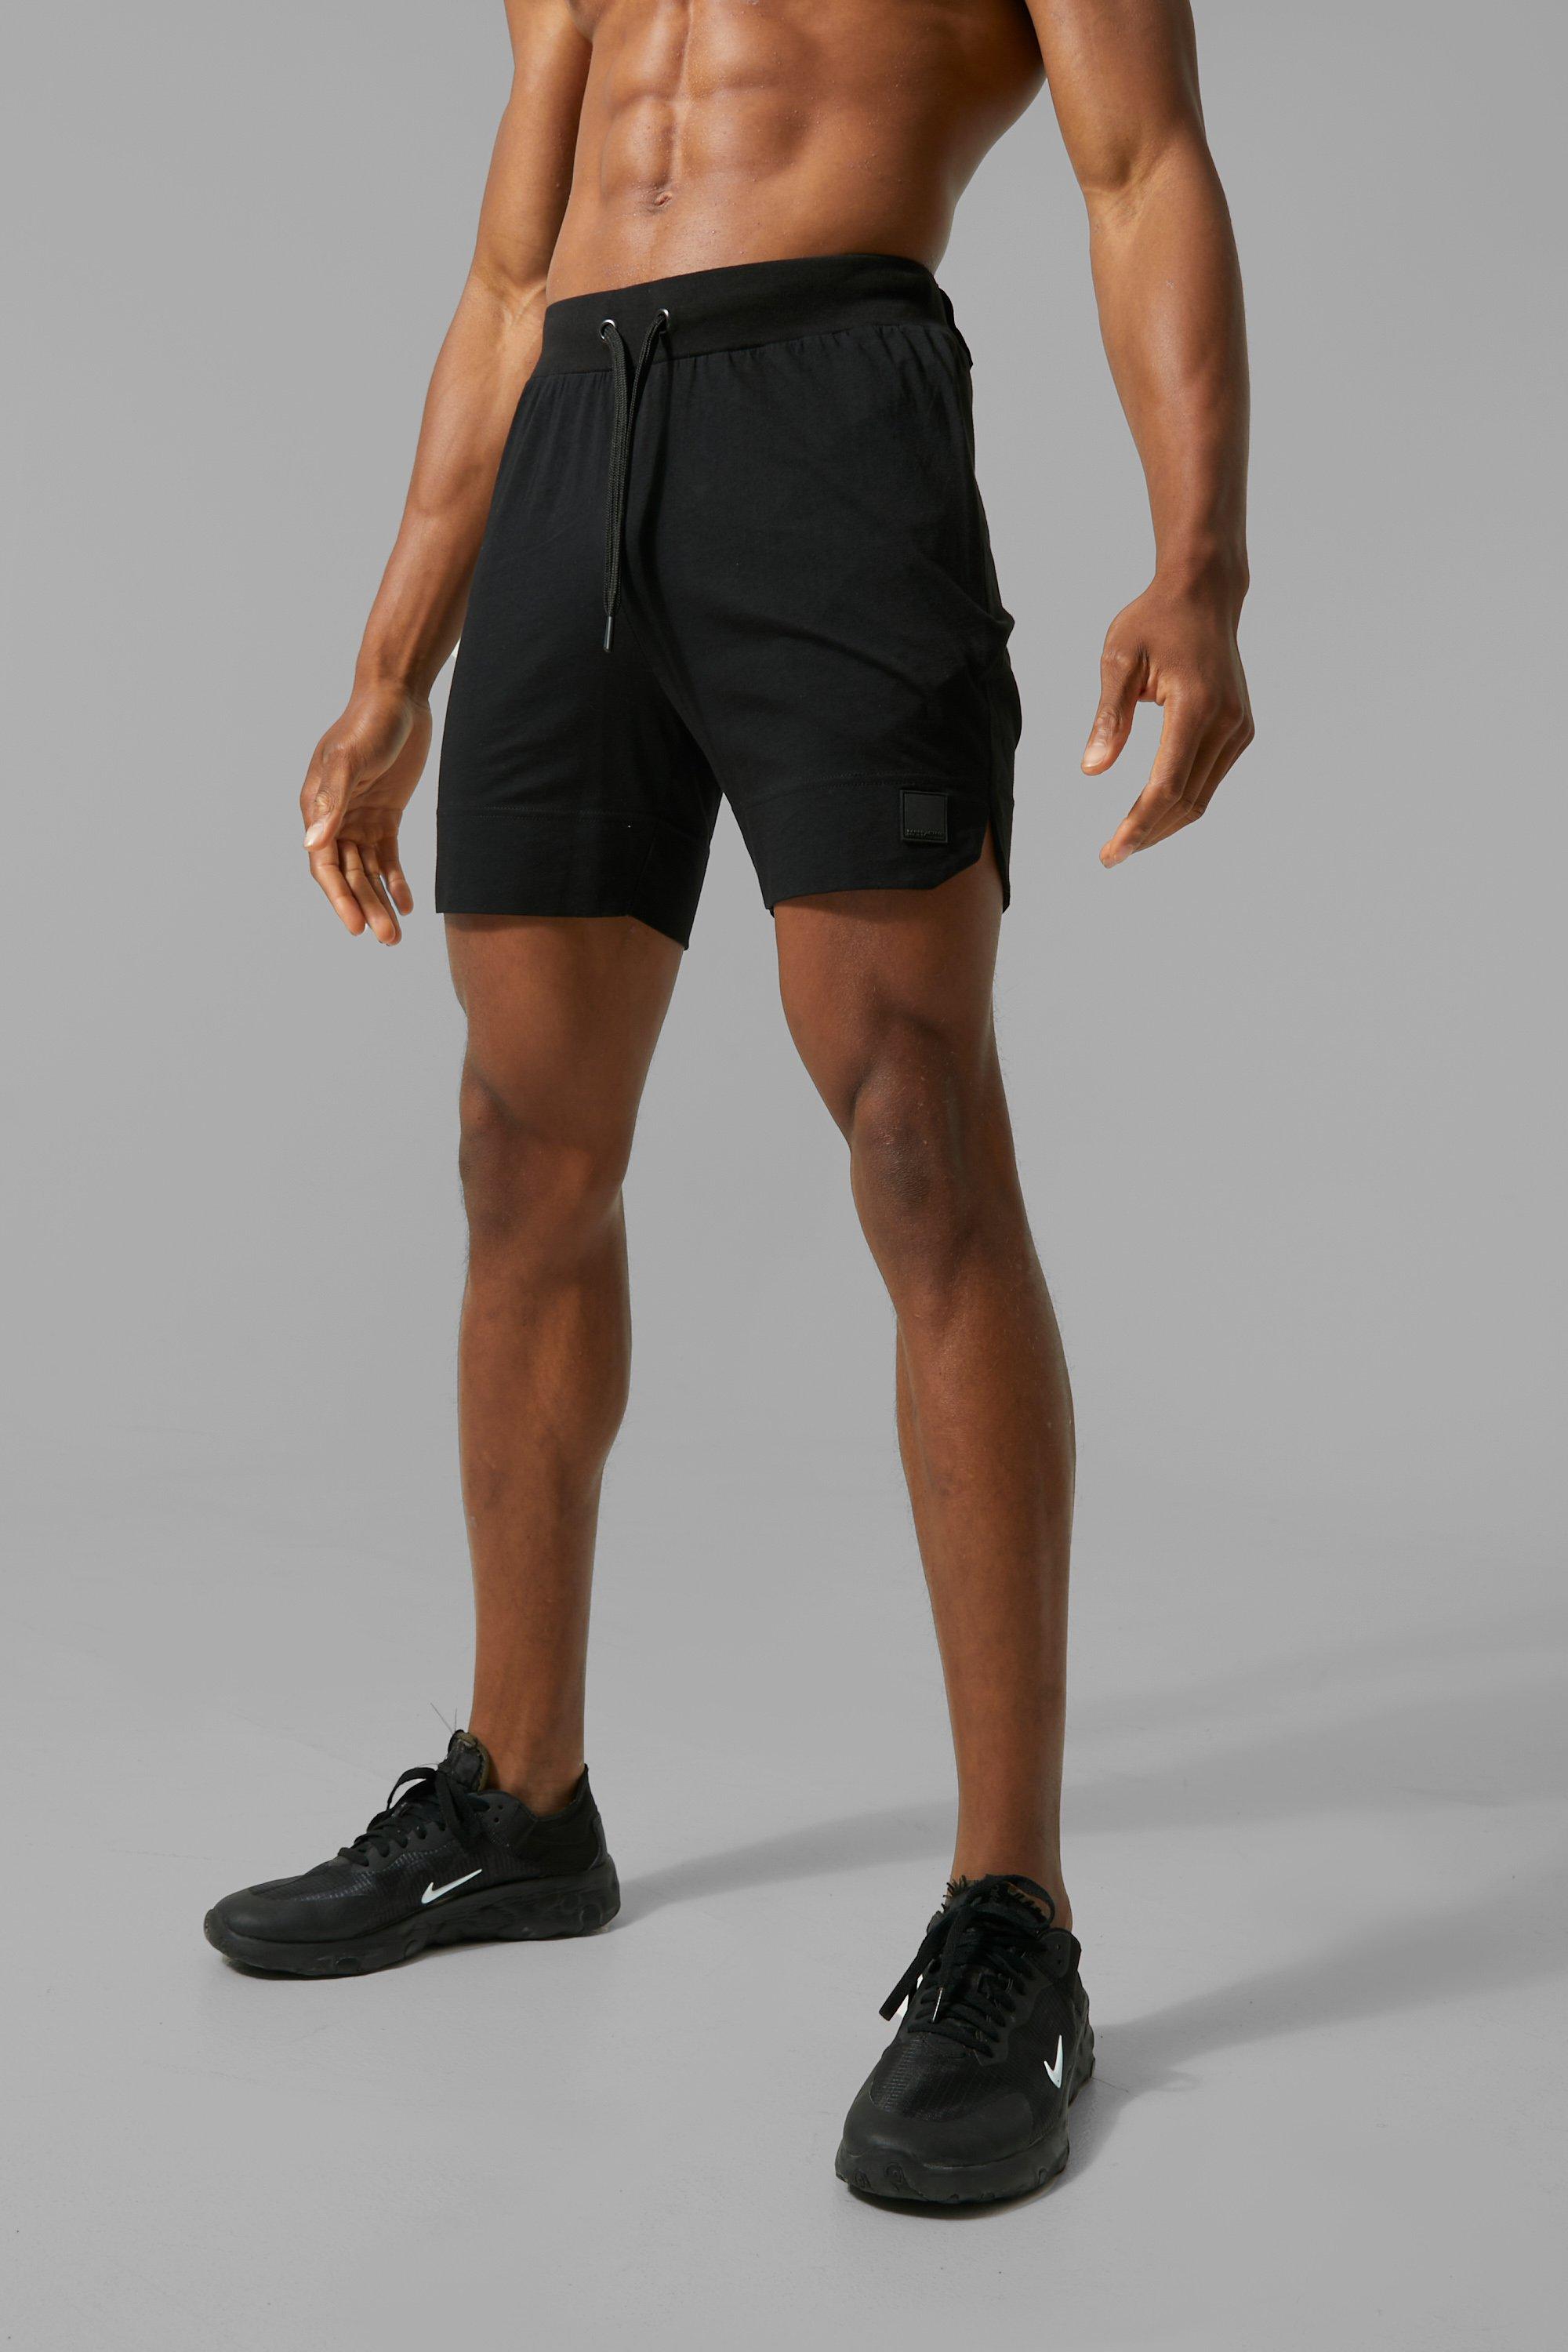 Man Active Muscle-Fit Shorts - Black - Xxl, Black